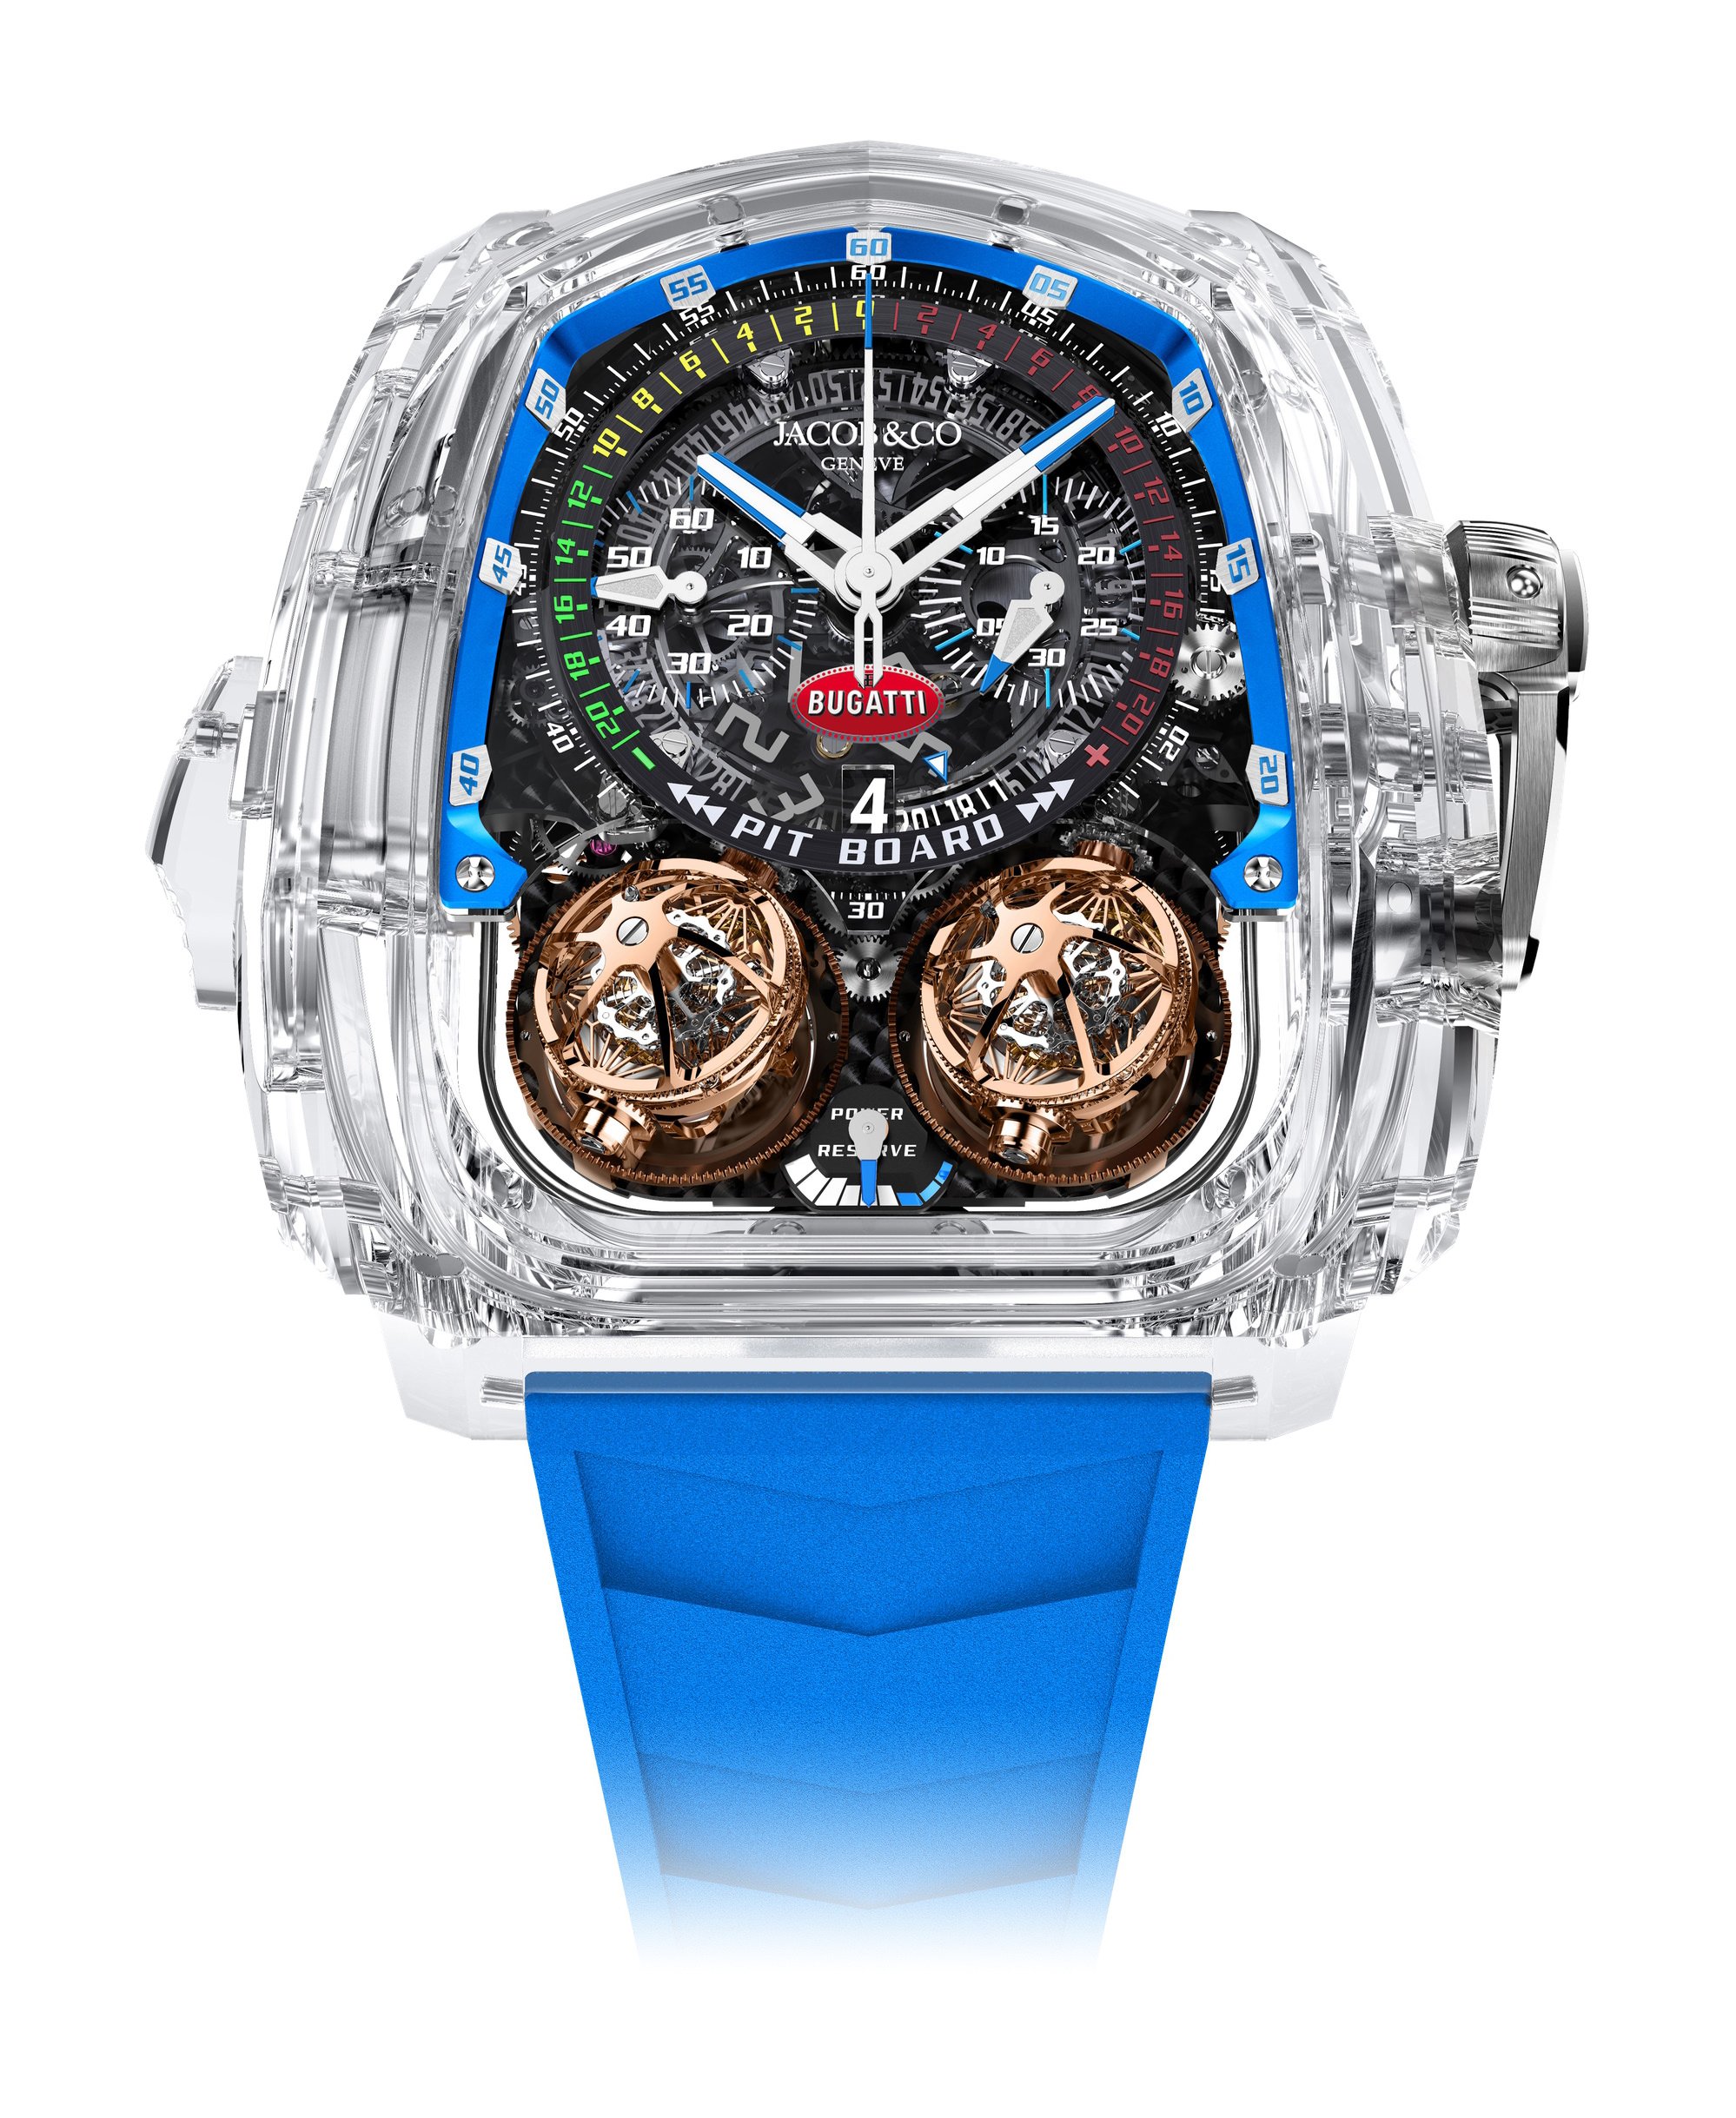 Jacob & Co Twin Turbo Furious Bugatti Sapphire Crystal replica watch TT220.80.AA.AB.A